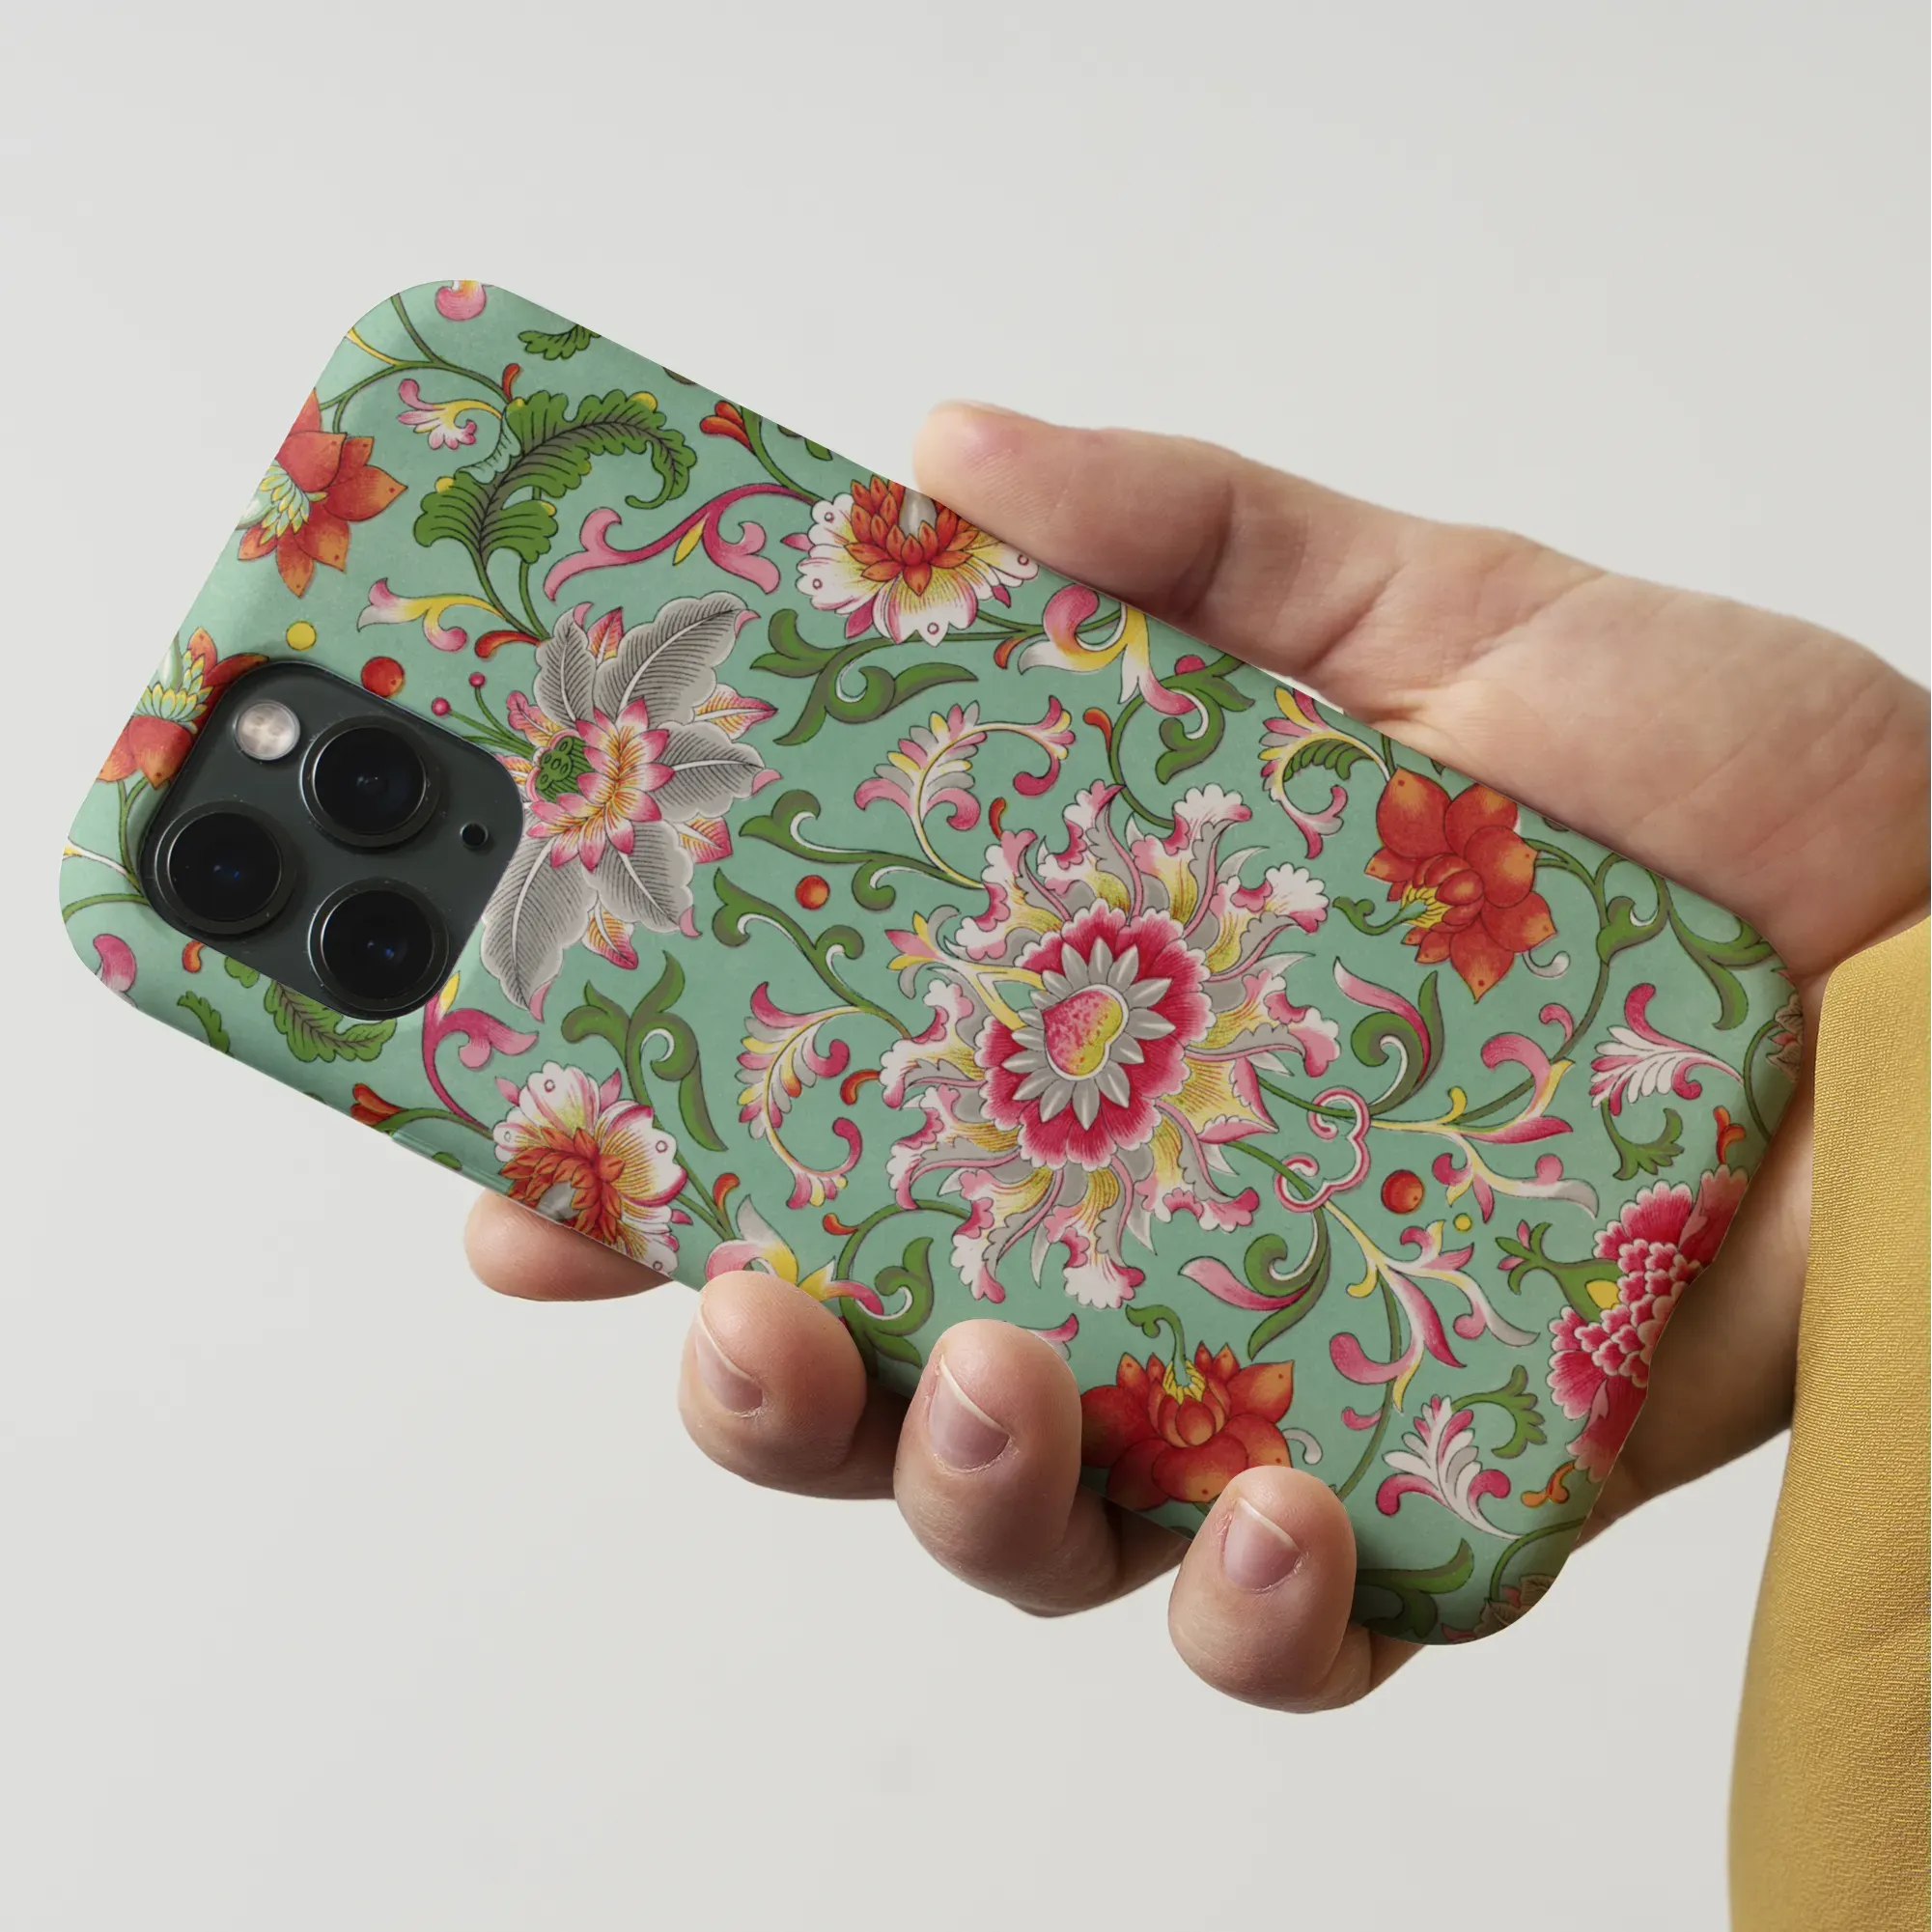 Chinese Floral Aesthetic Art Phone Case - Owen Jones - Mobile Phone Cases - Aesthetic Art